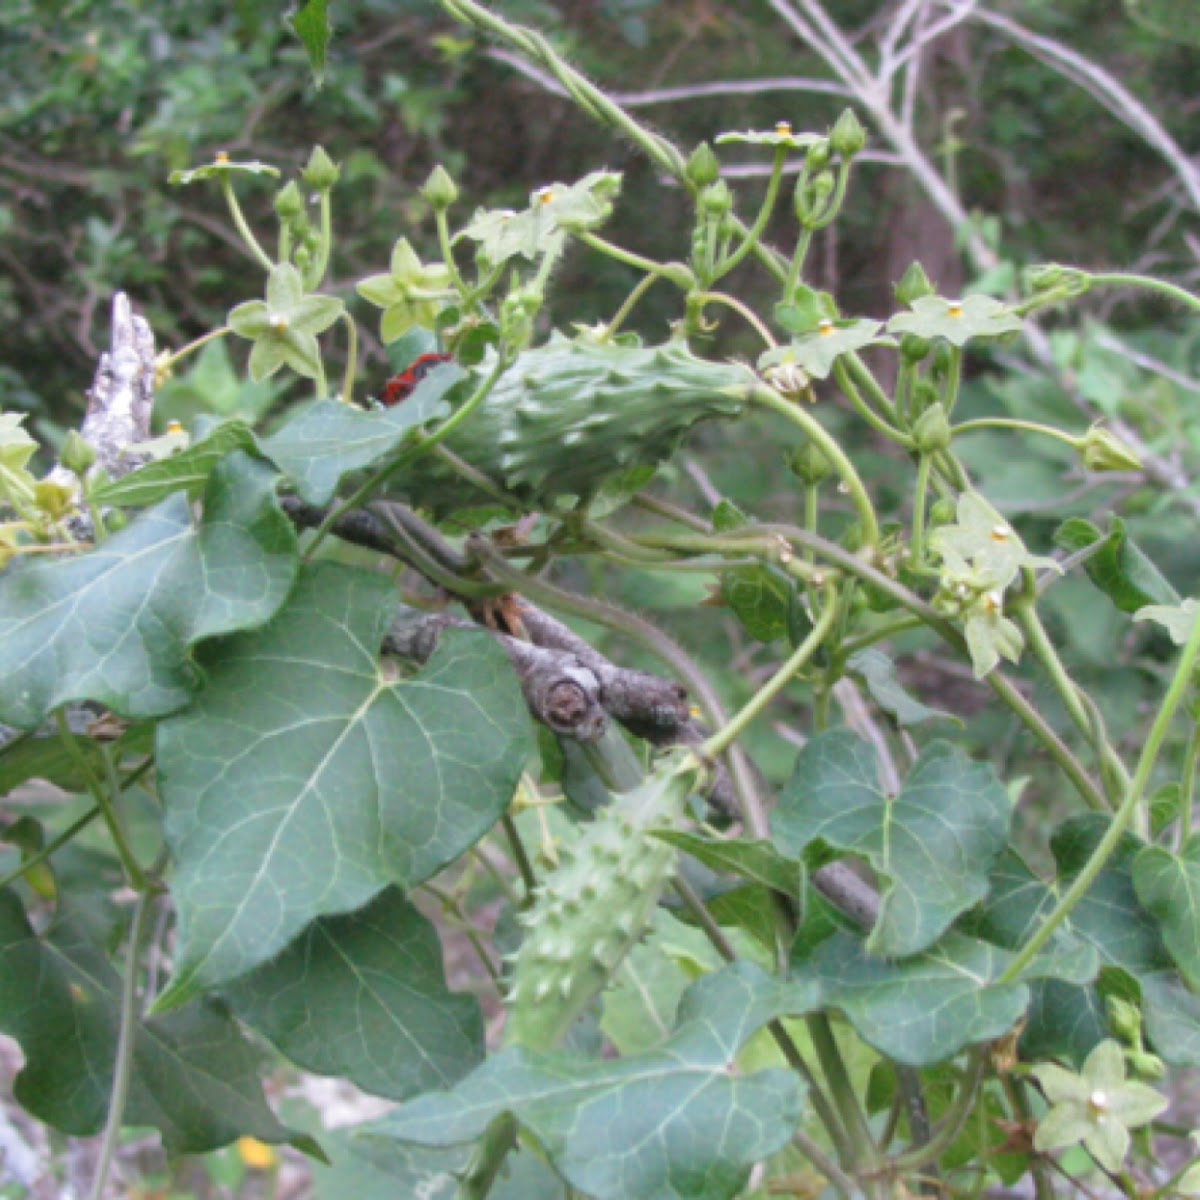 Pearl Milkweed, Green Milkweed Vine